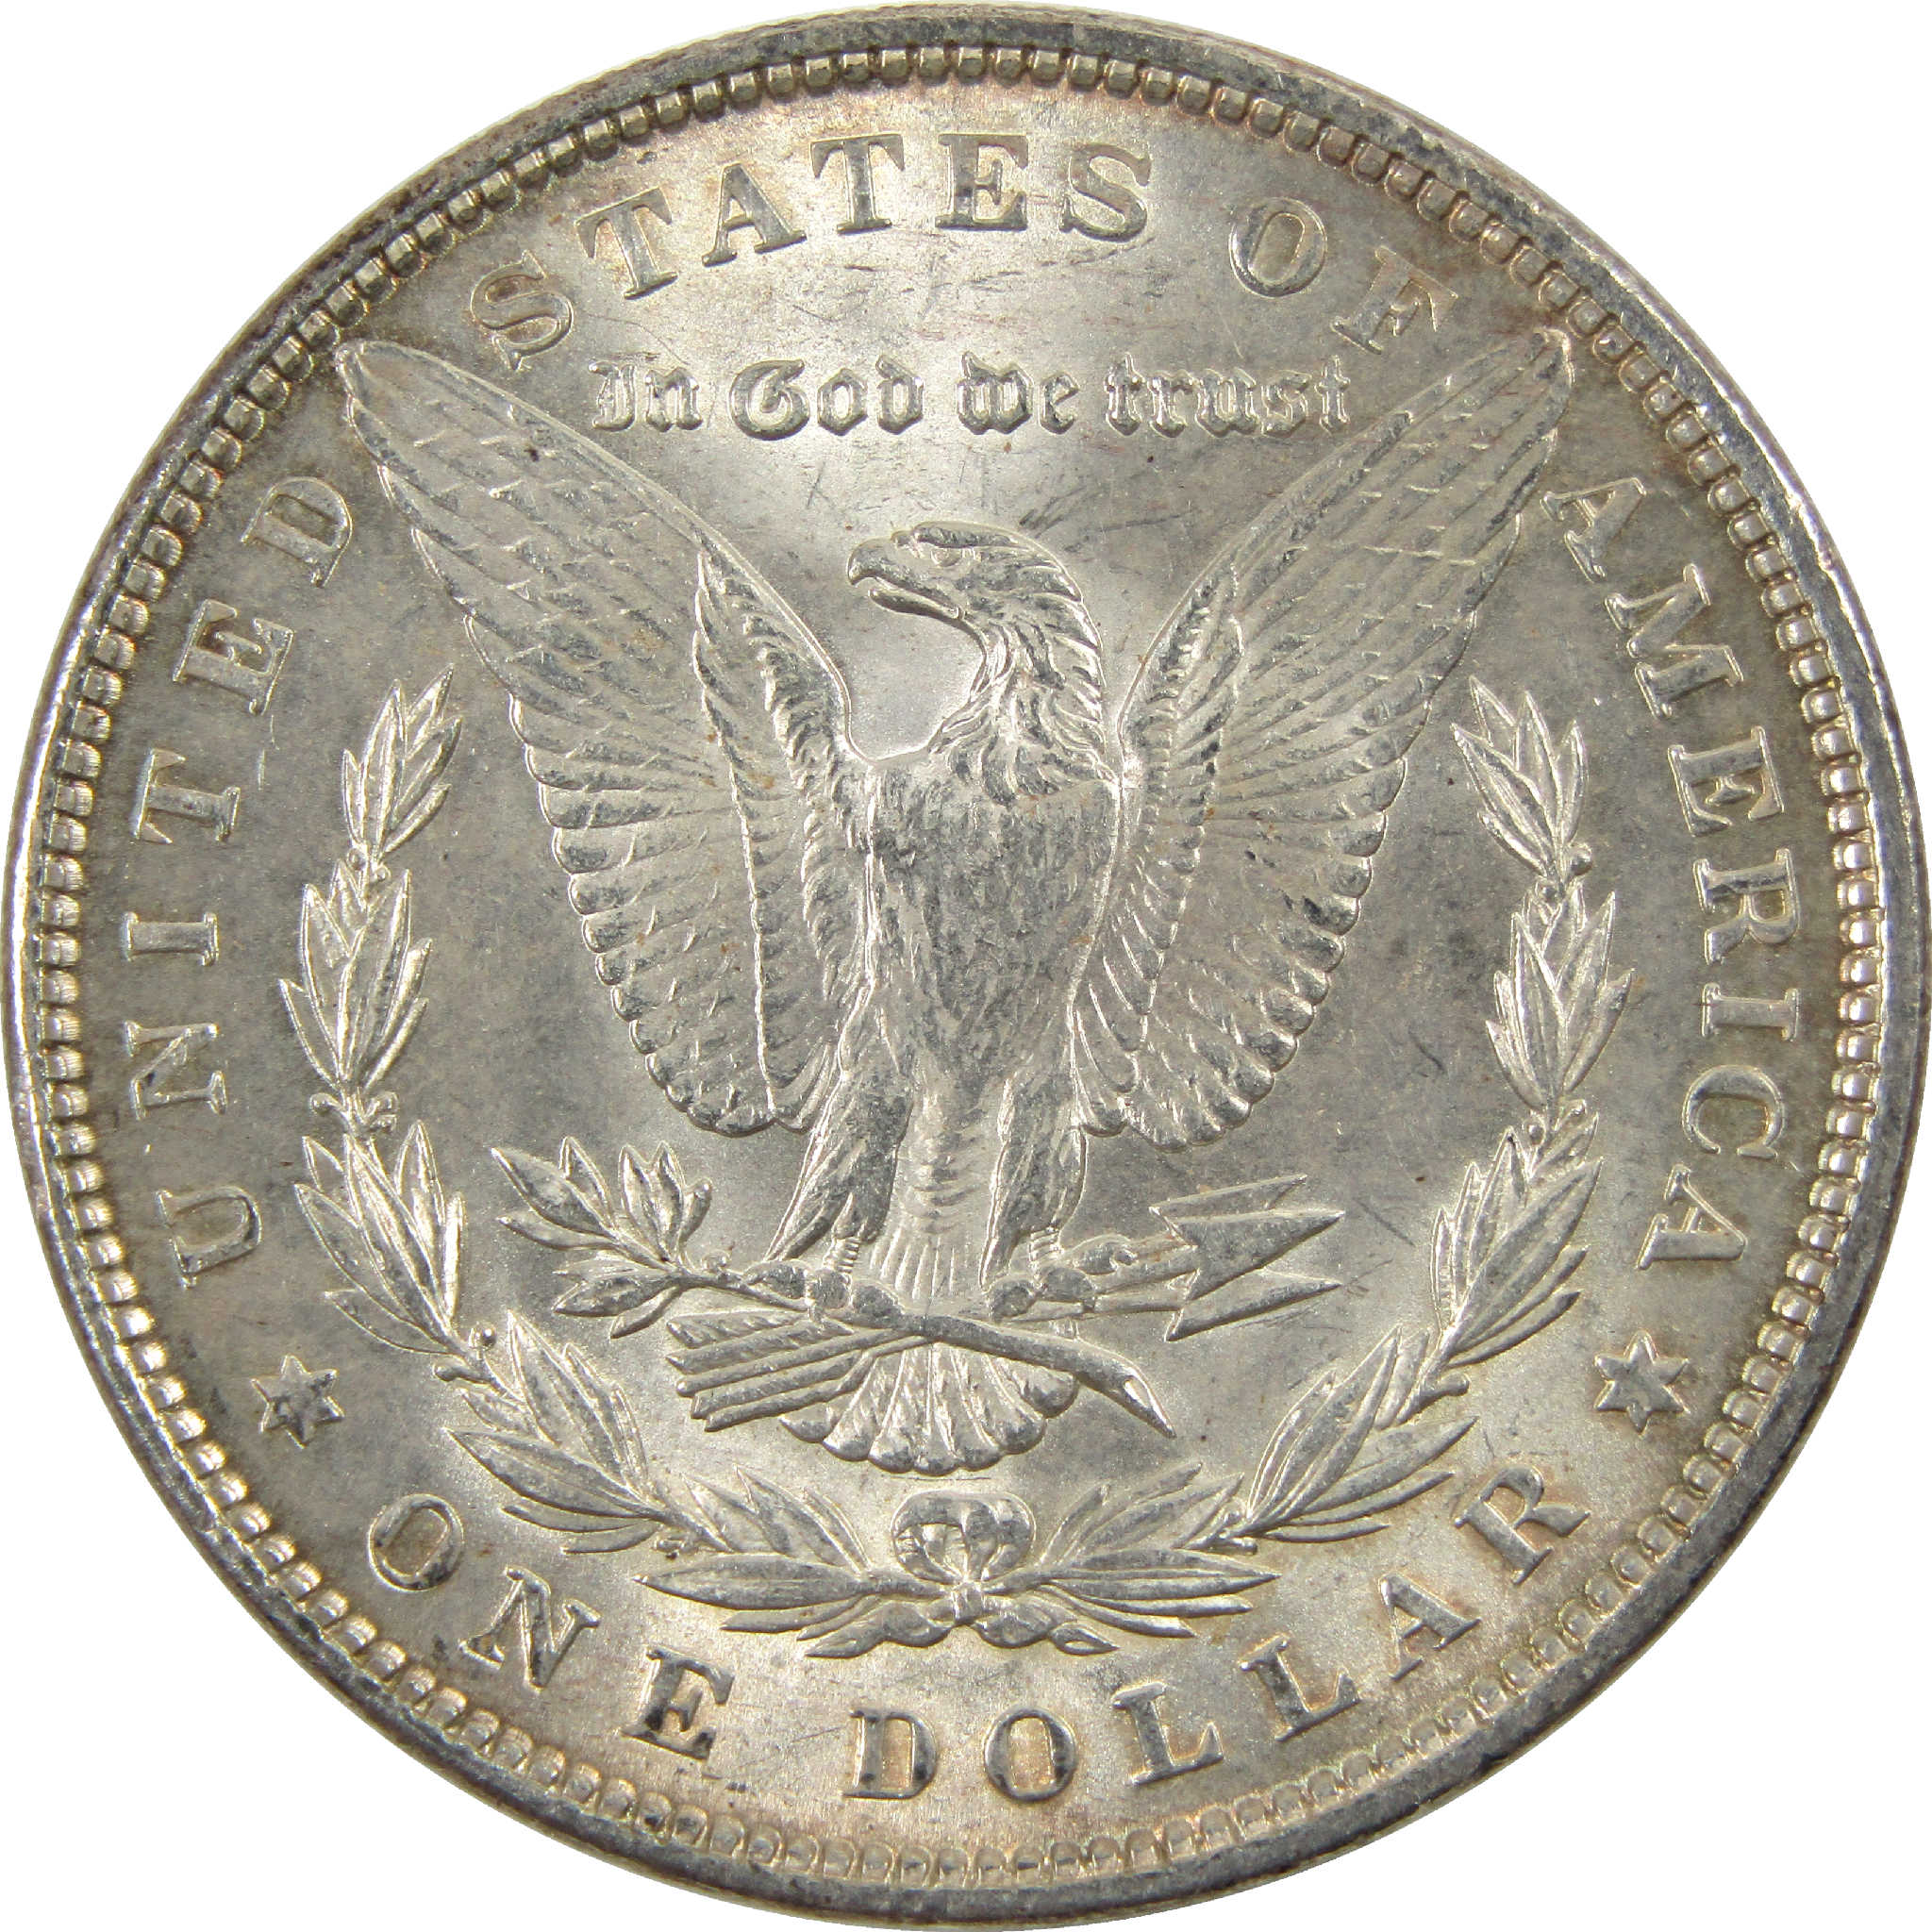 1889 Morgan Dollar CH AU Choice About Uncirculated Silver $1 Coin - Morgan coin - Morgan silver dollar - Morgan silver dollar for sale - Profile Coins &amp; Collectibles